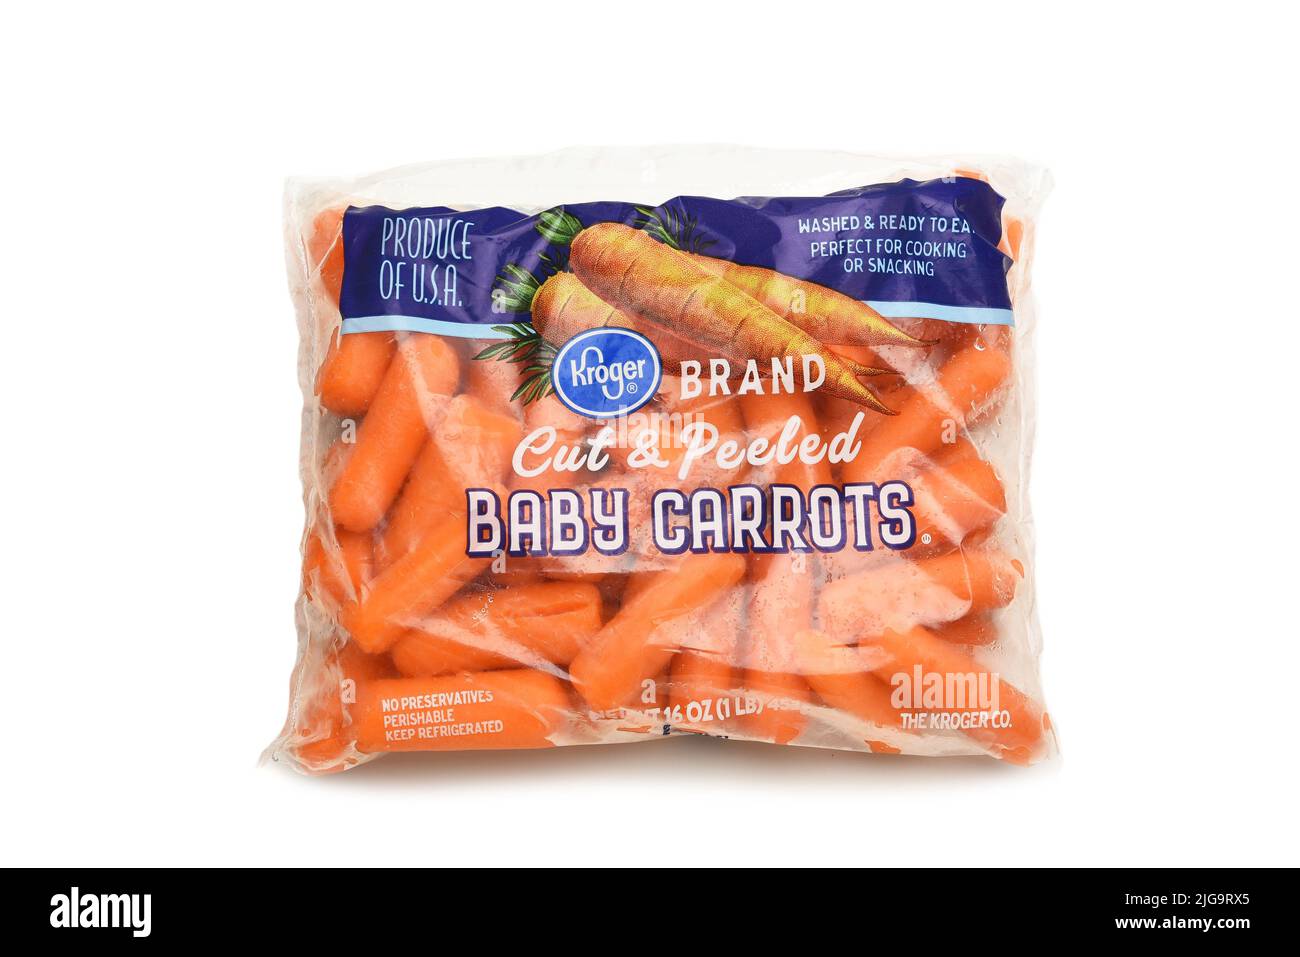 IRVINE, CALIFORNIA - 8 JUL 2022: Un paquete de zanahorias Kroger Baby. Foto de stock